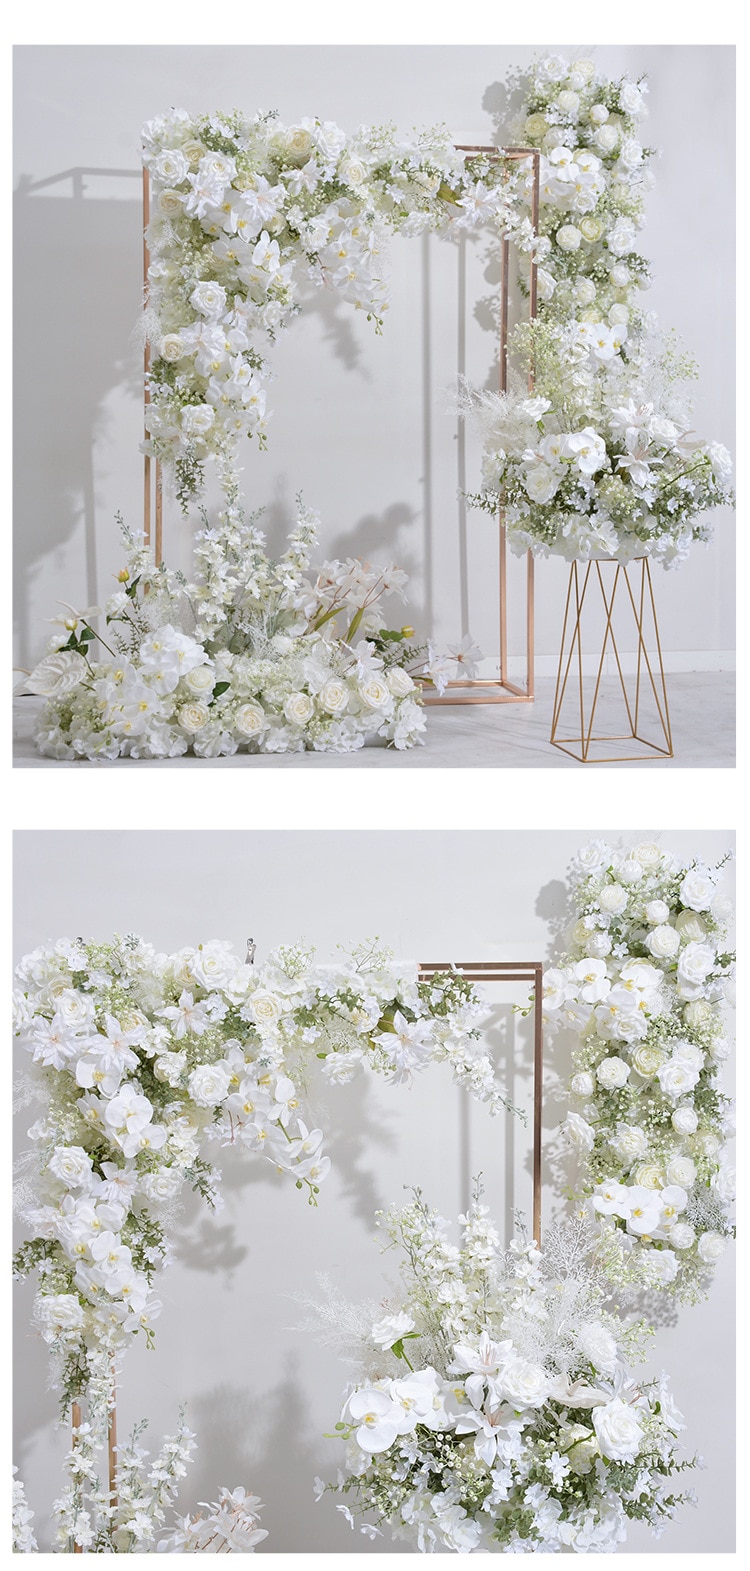 ebay wedding flower bouquets8